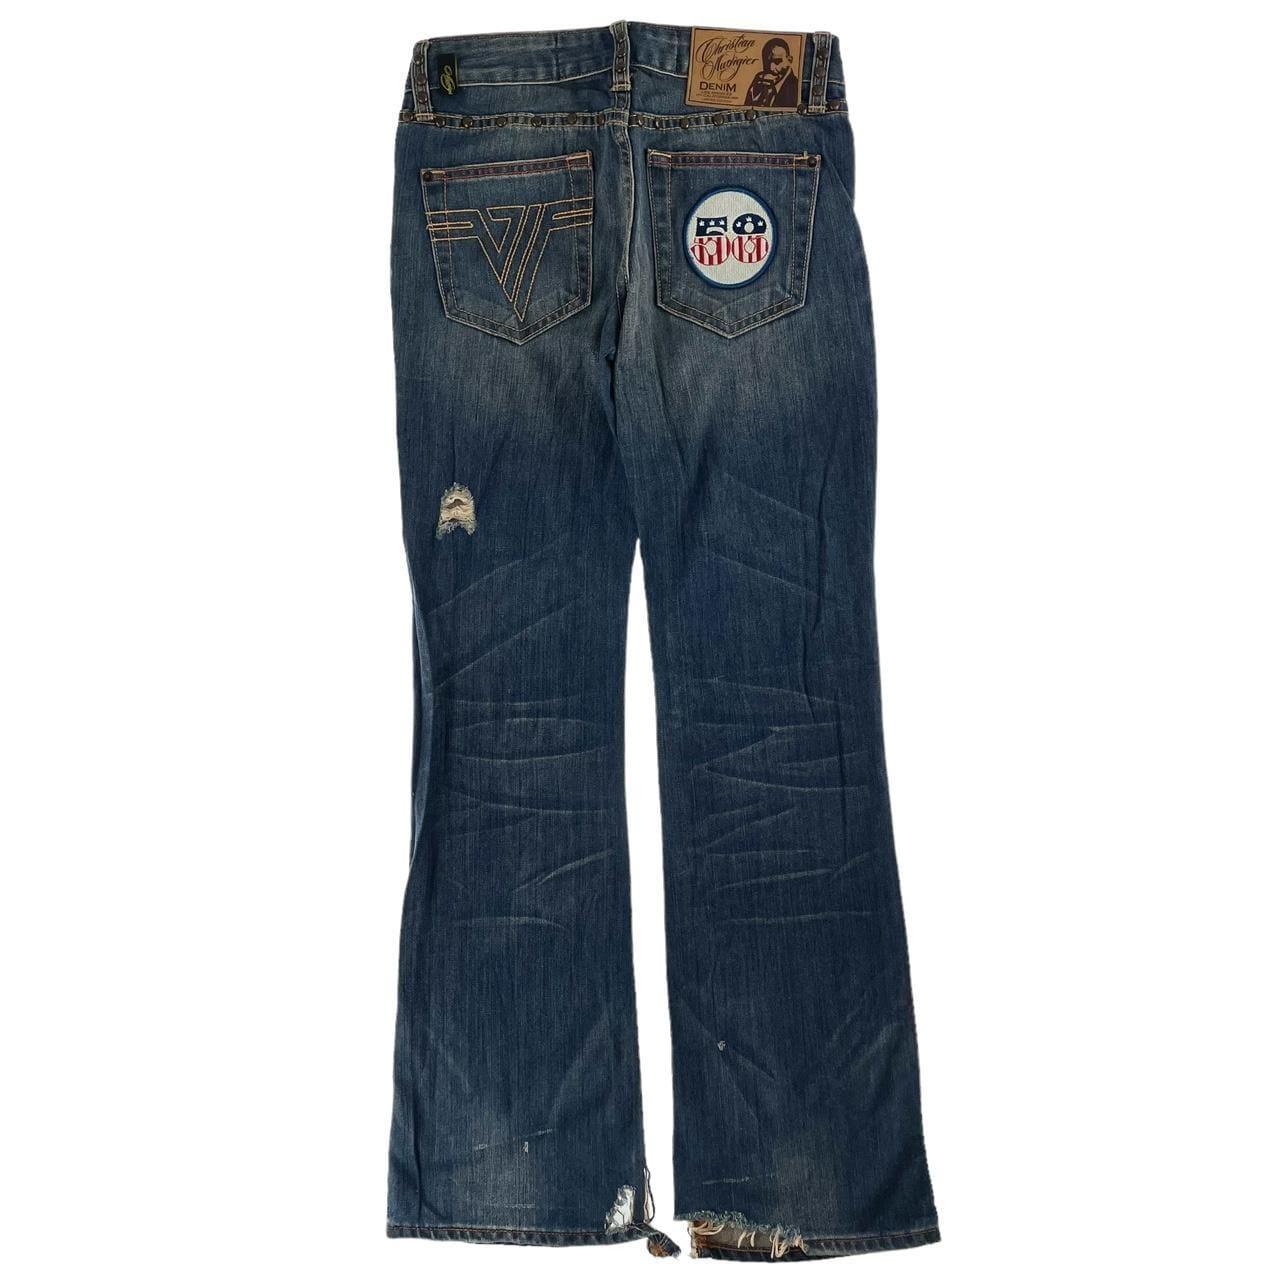 Vintage Christian Audigier denim jeans trousers W29 - Known Source